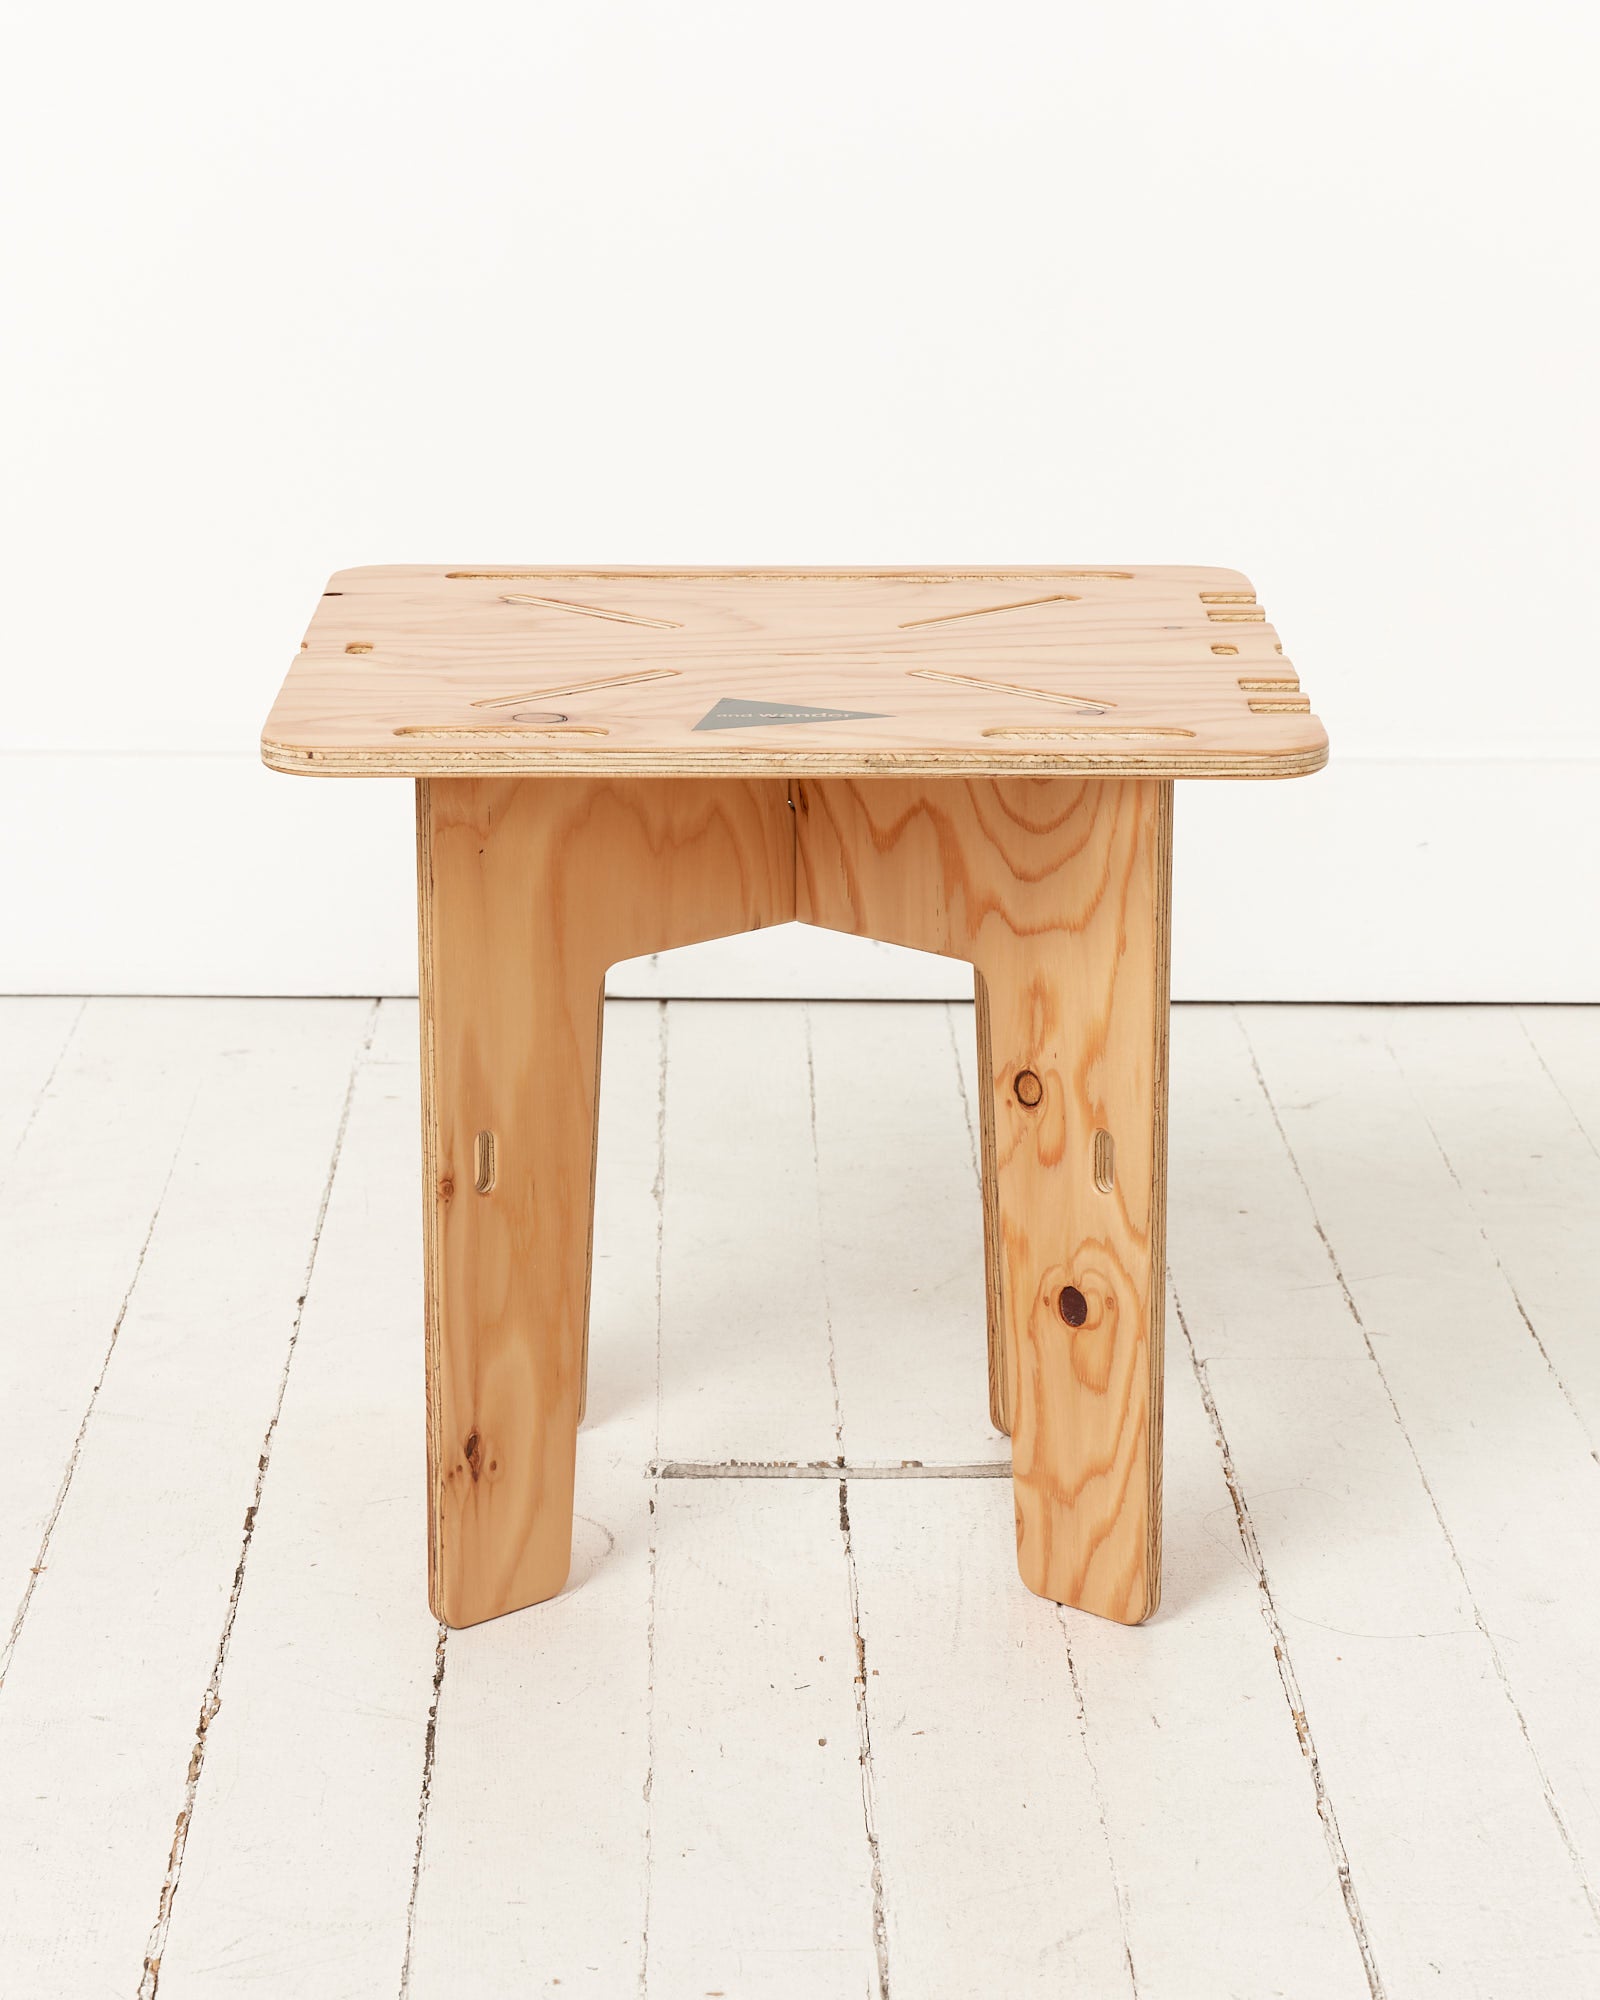 And Wander x 146 Yoka TAKIBI Wood Table